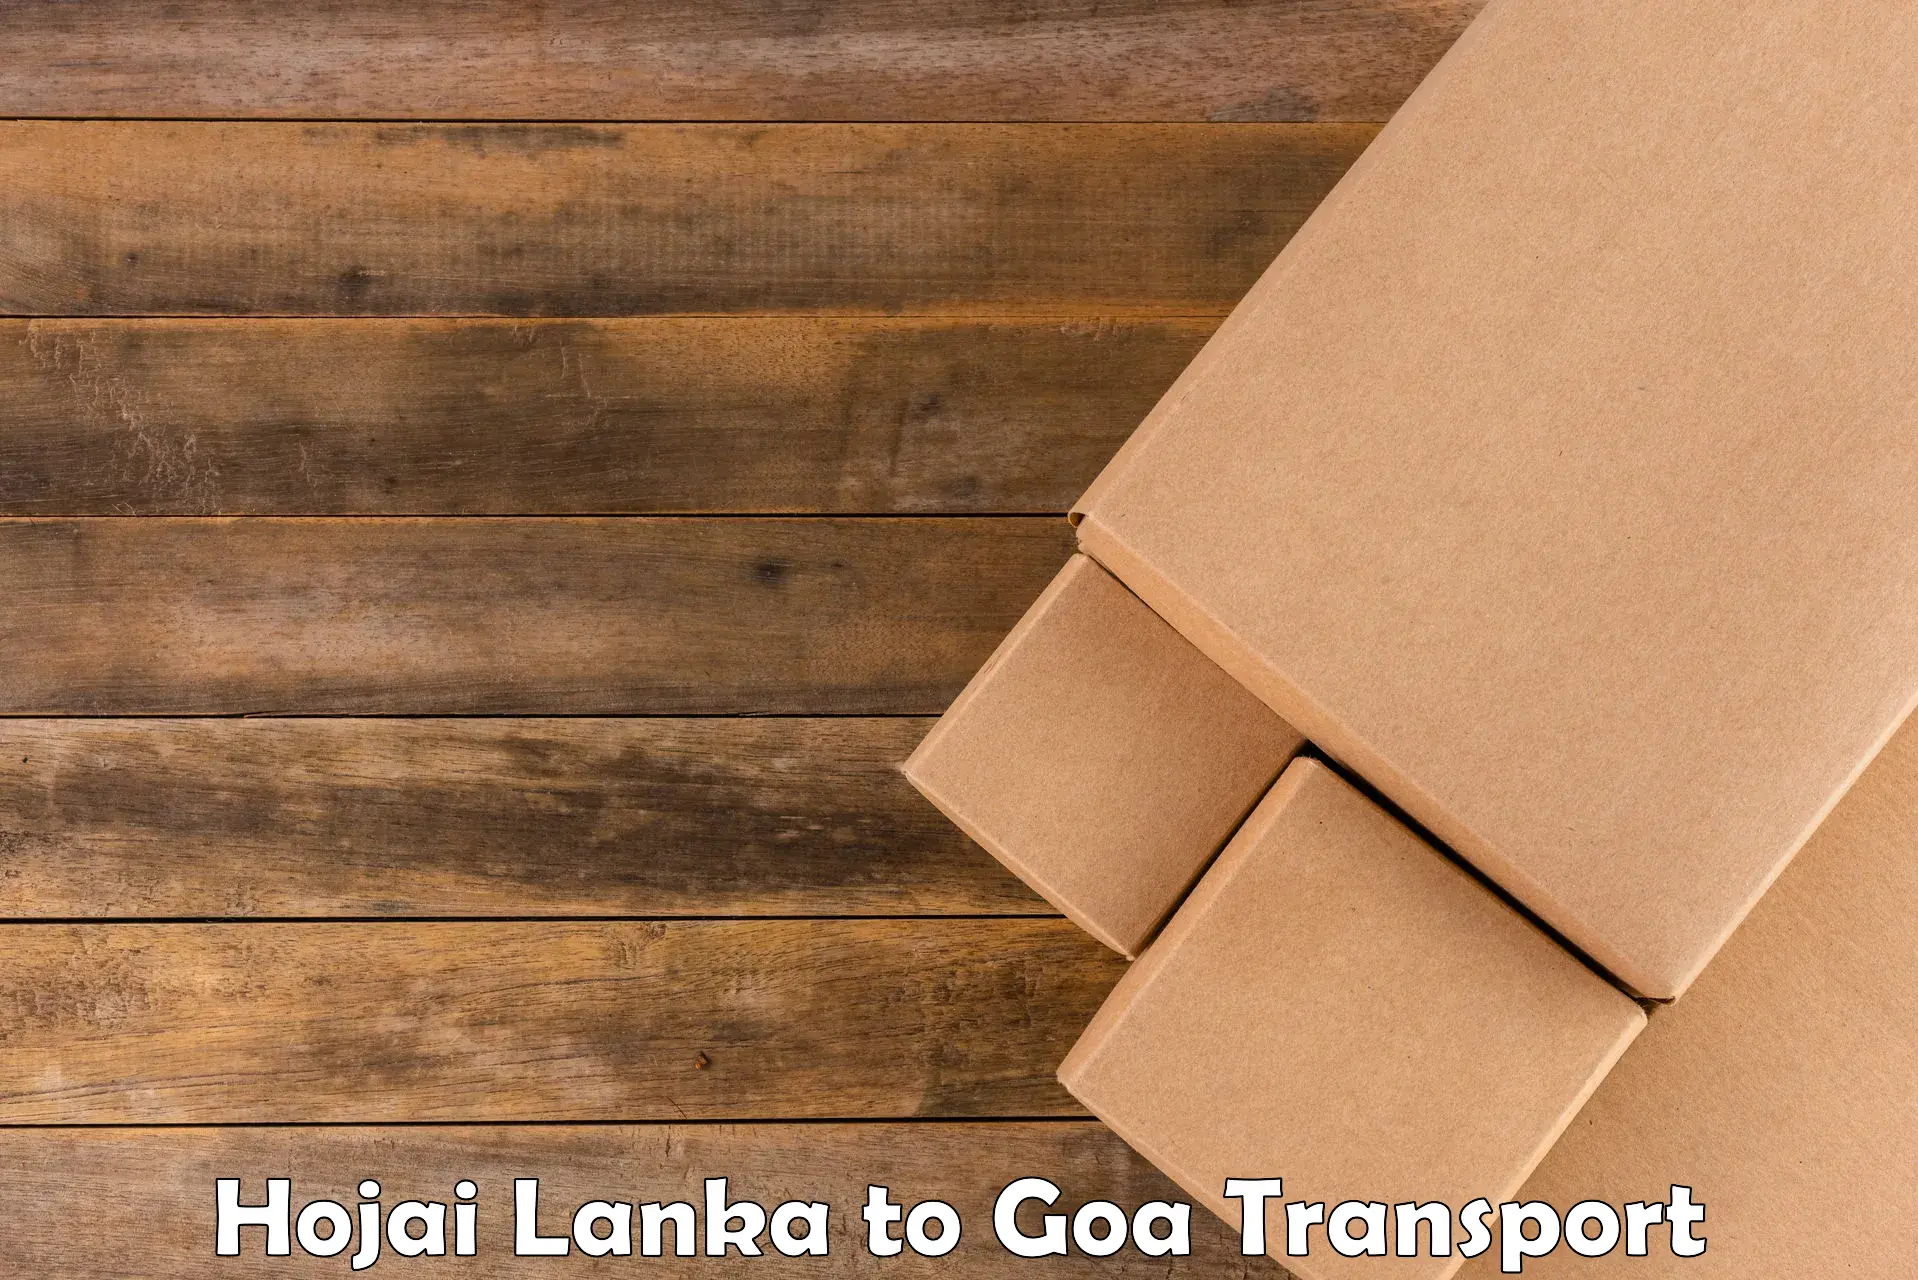 Daily transport service Hojai Lanka to South Goa